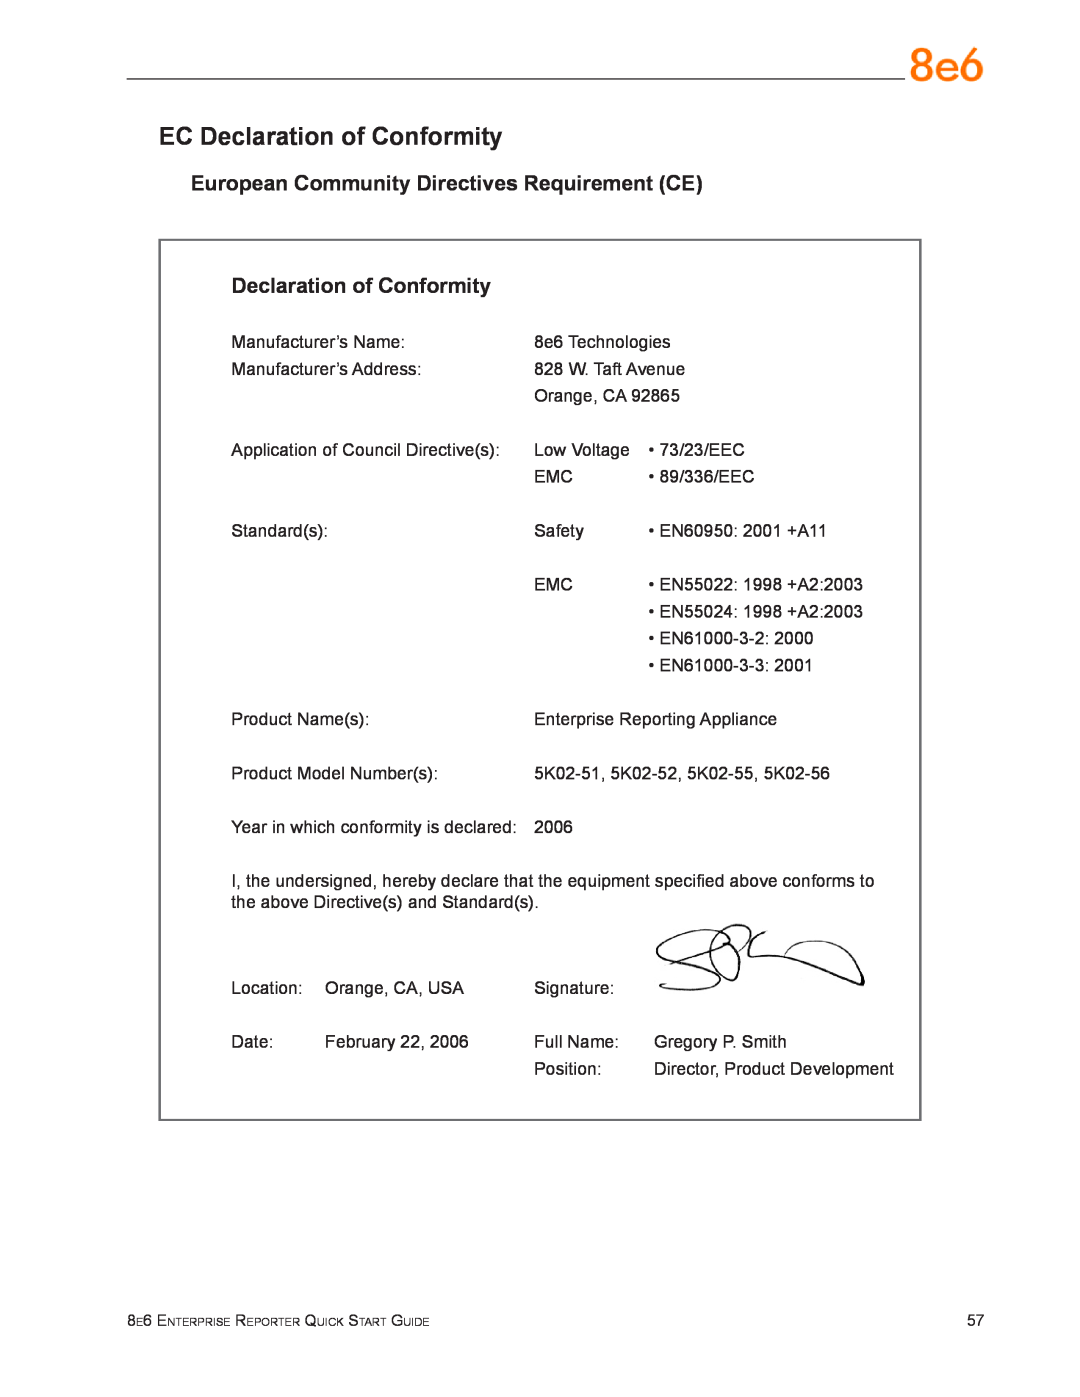 8e6 Technologies ER3-200 (5K02-56) quick start EC Declaration of Conformity, European Community Directives Requirement CE 